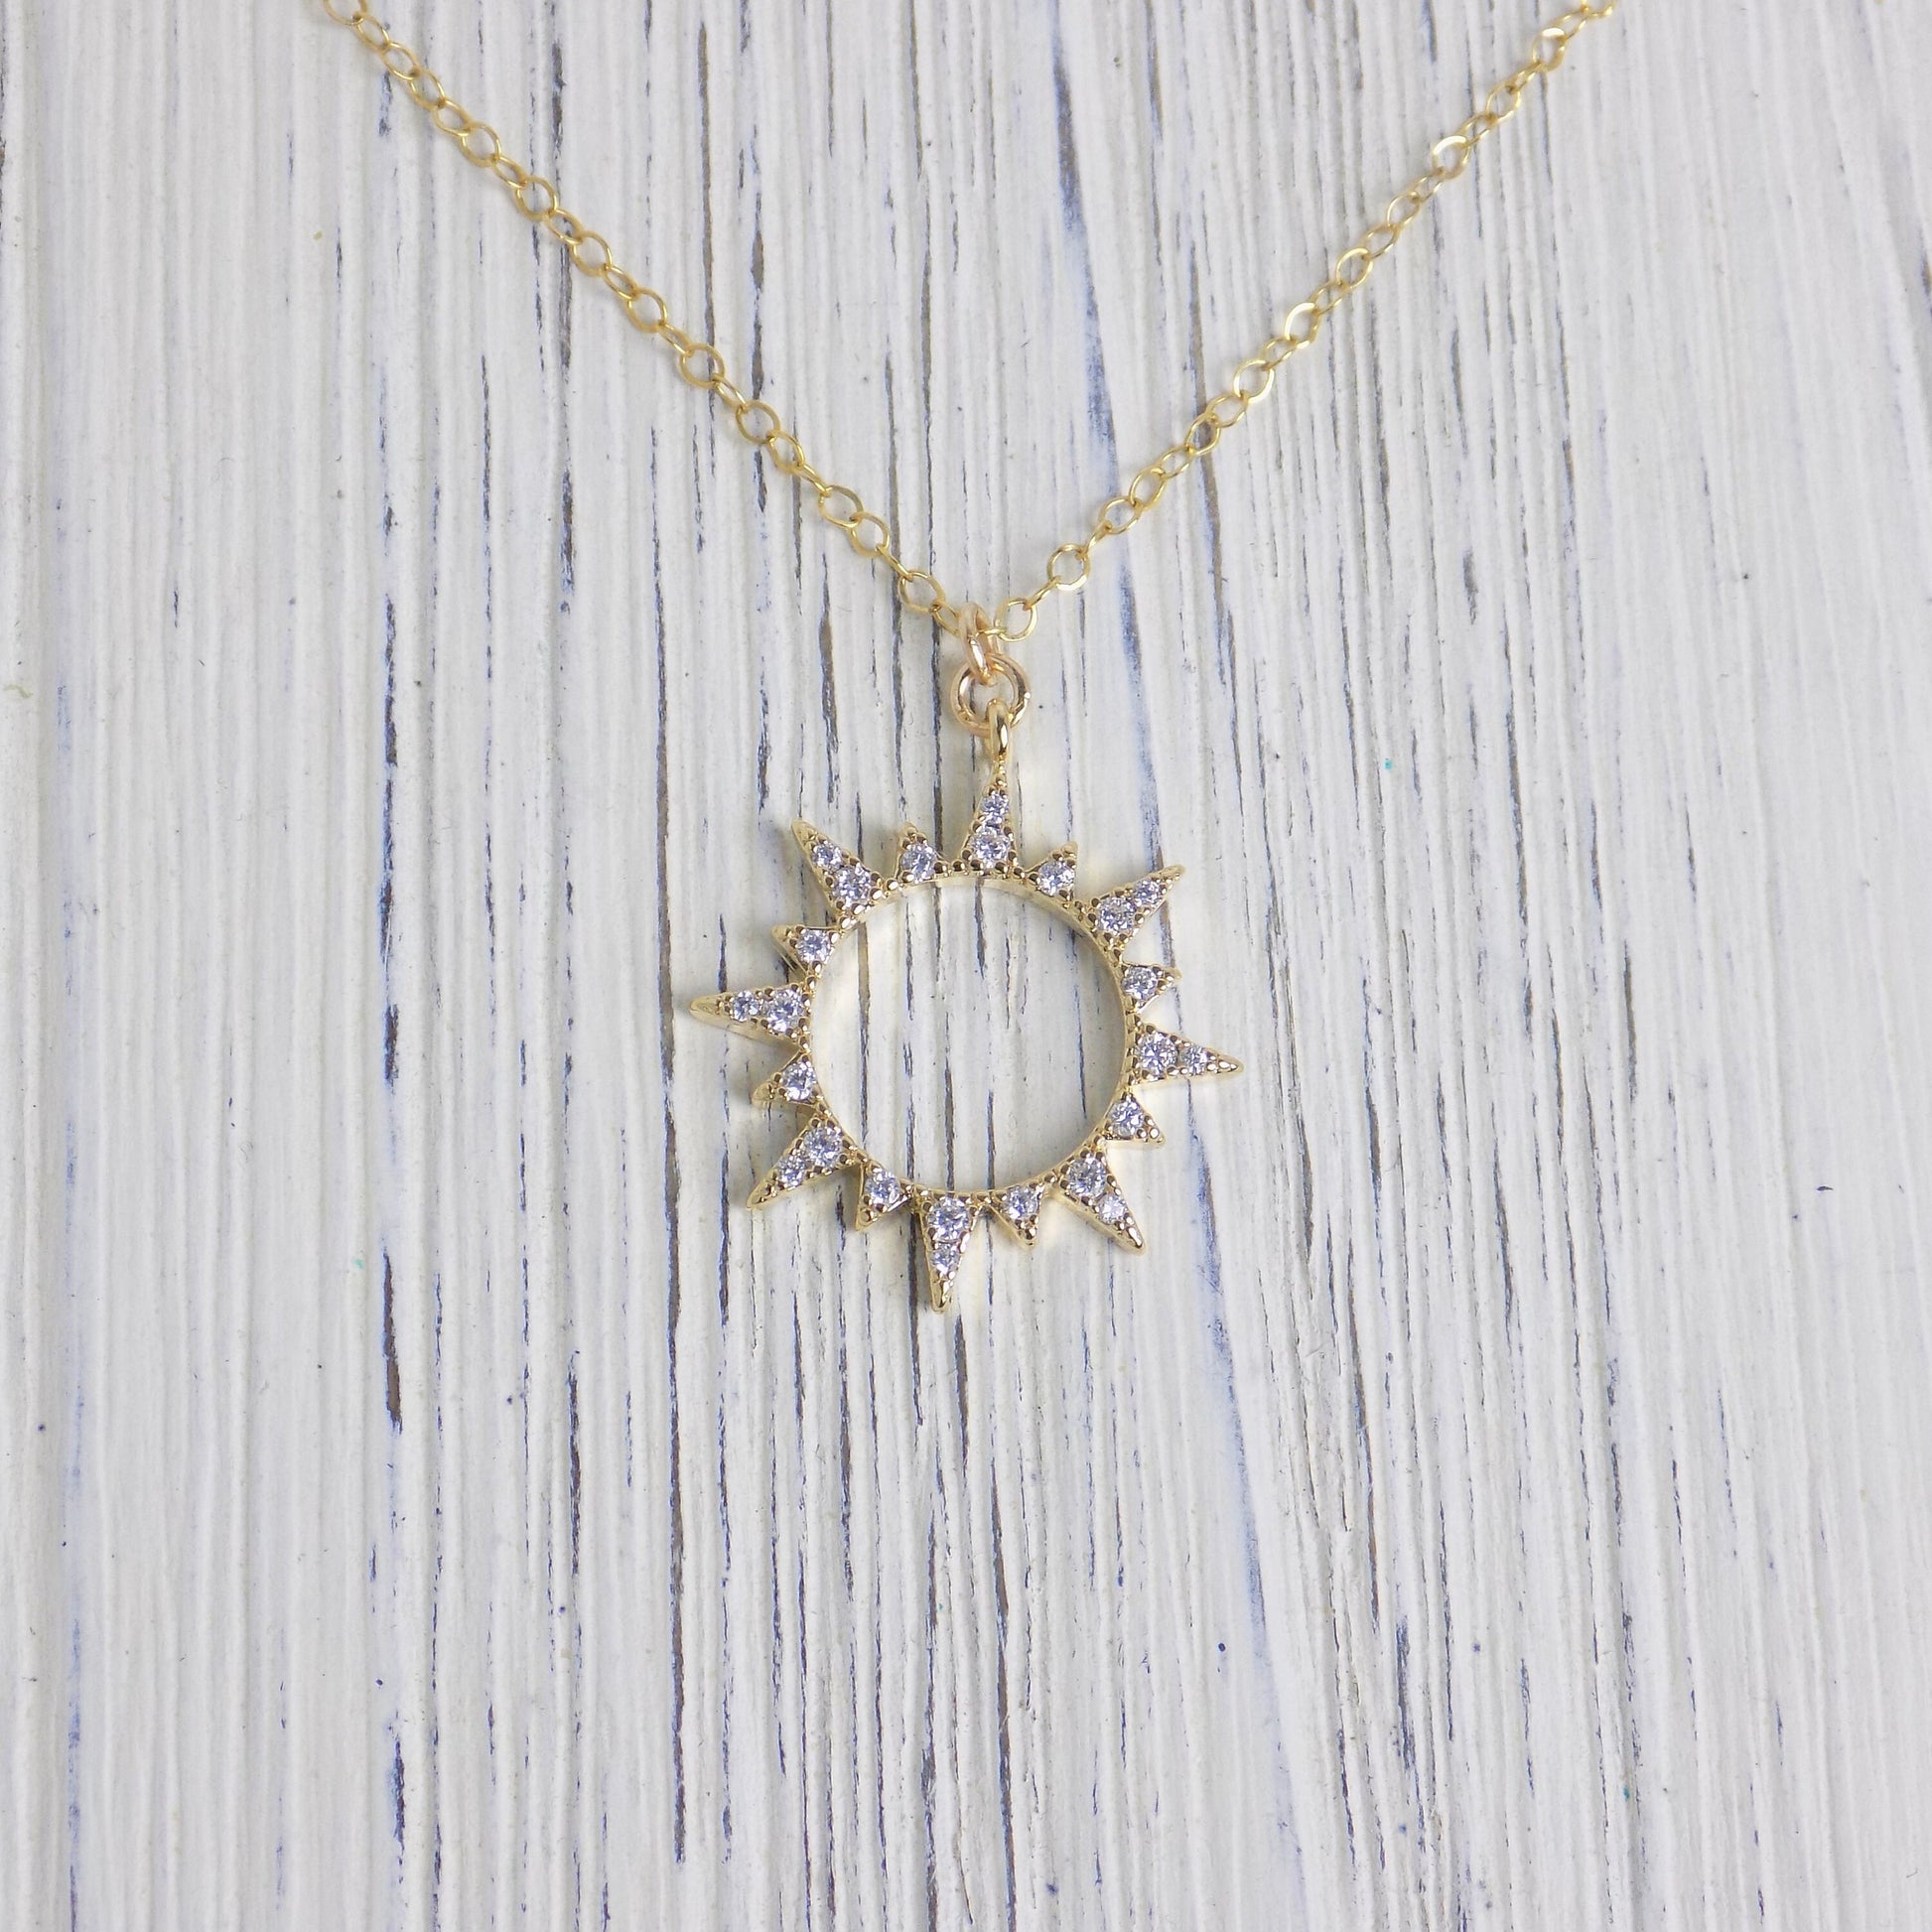 Celestial Jewelry - Gold Sun Necklace